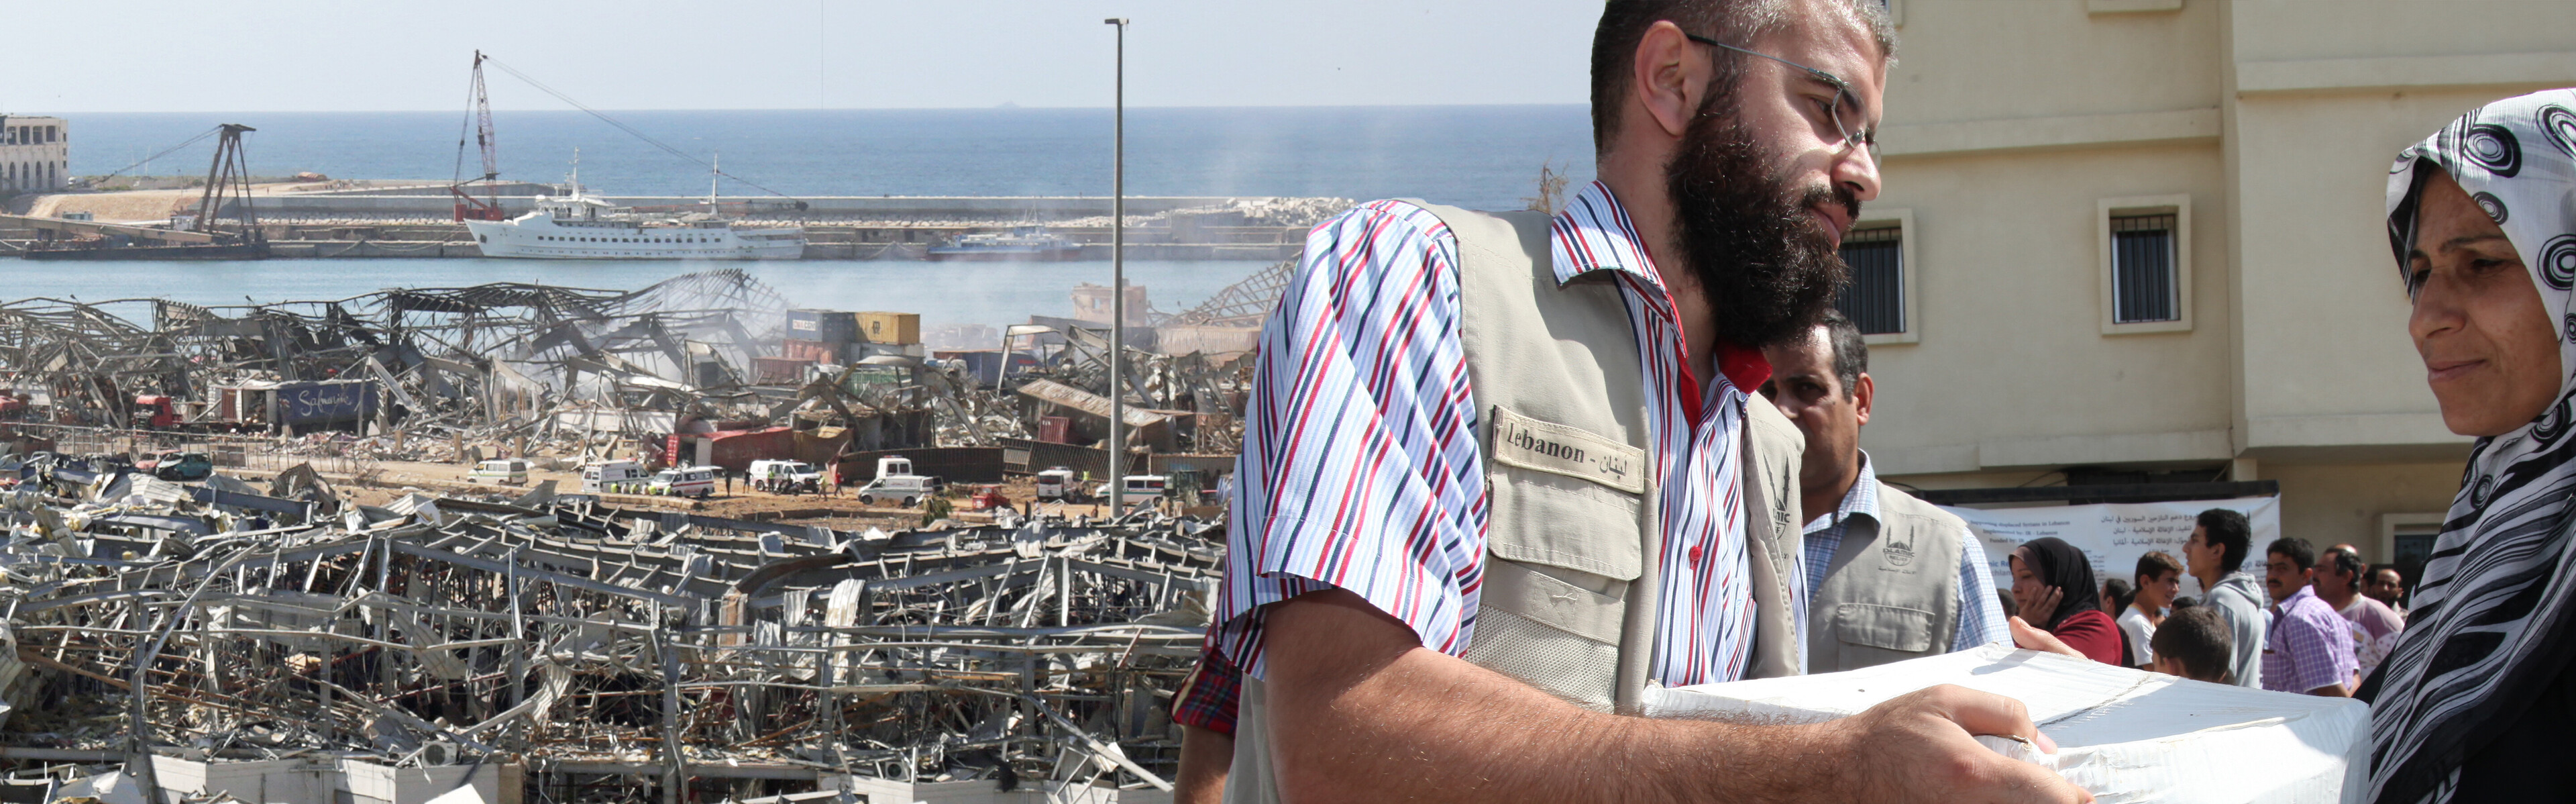 Explosion Beirut/Libanon: Unser Bündnis leistet Nothilfe